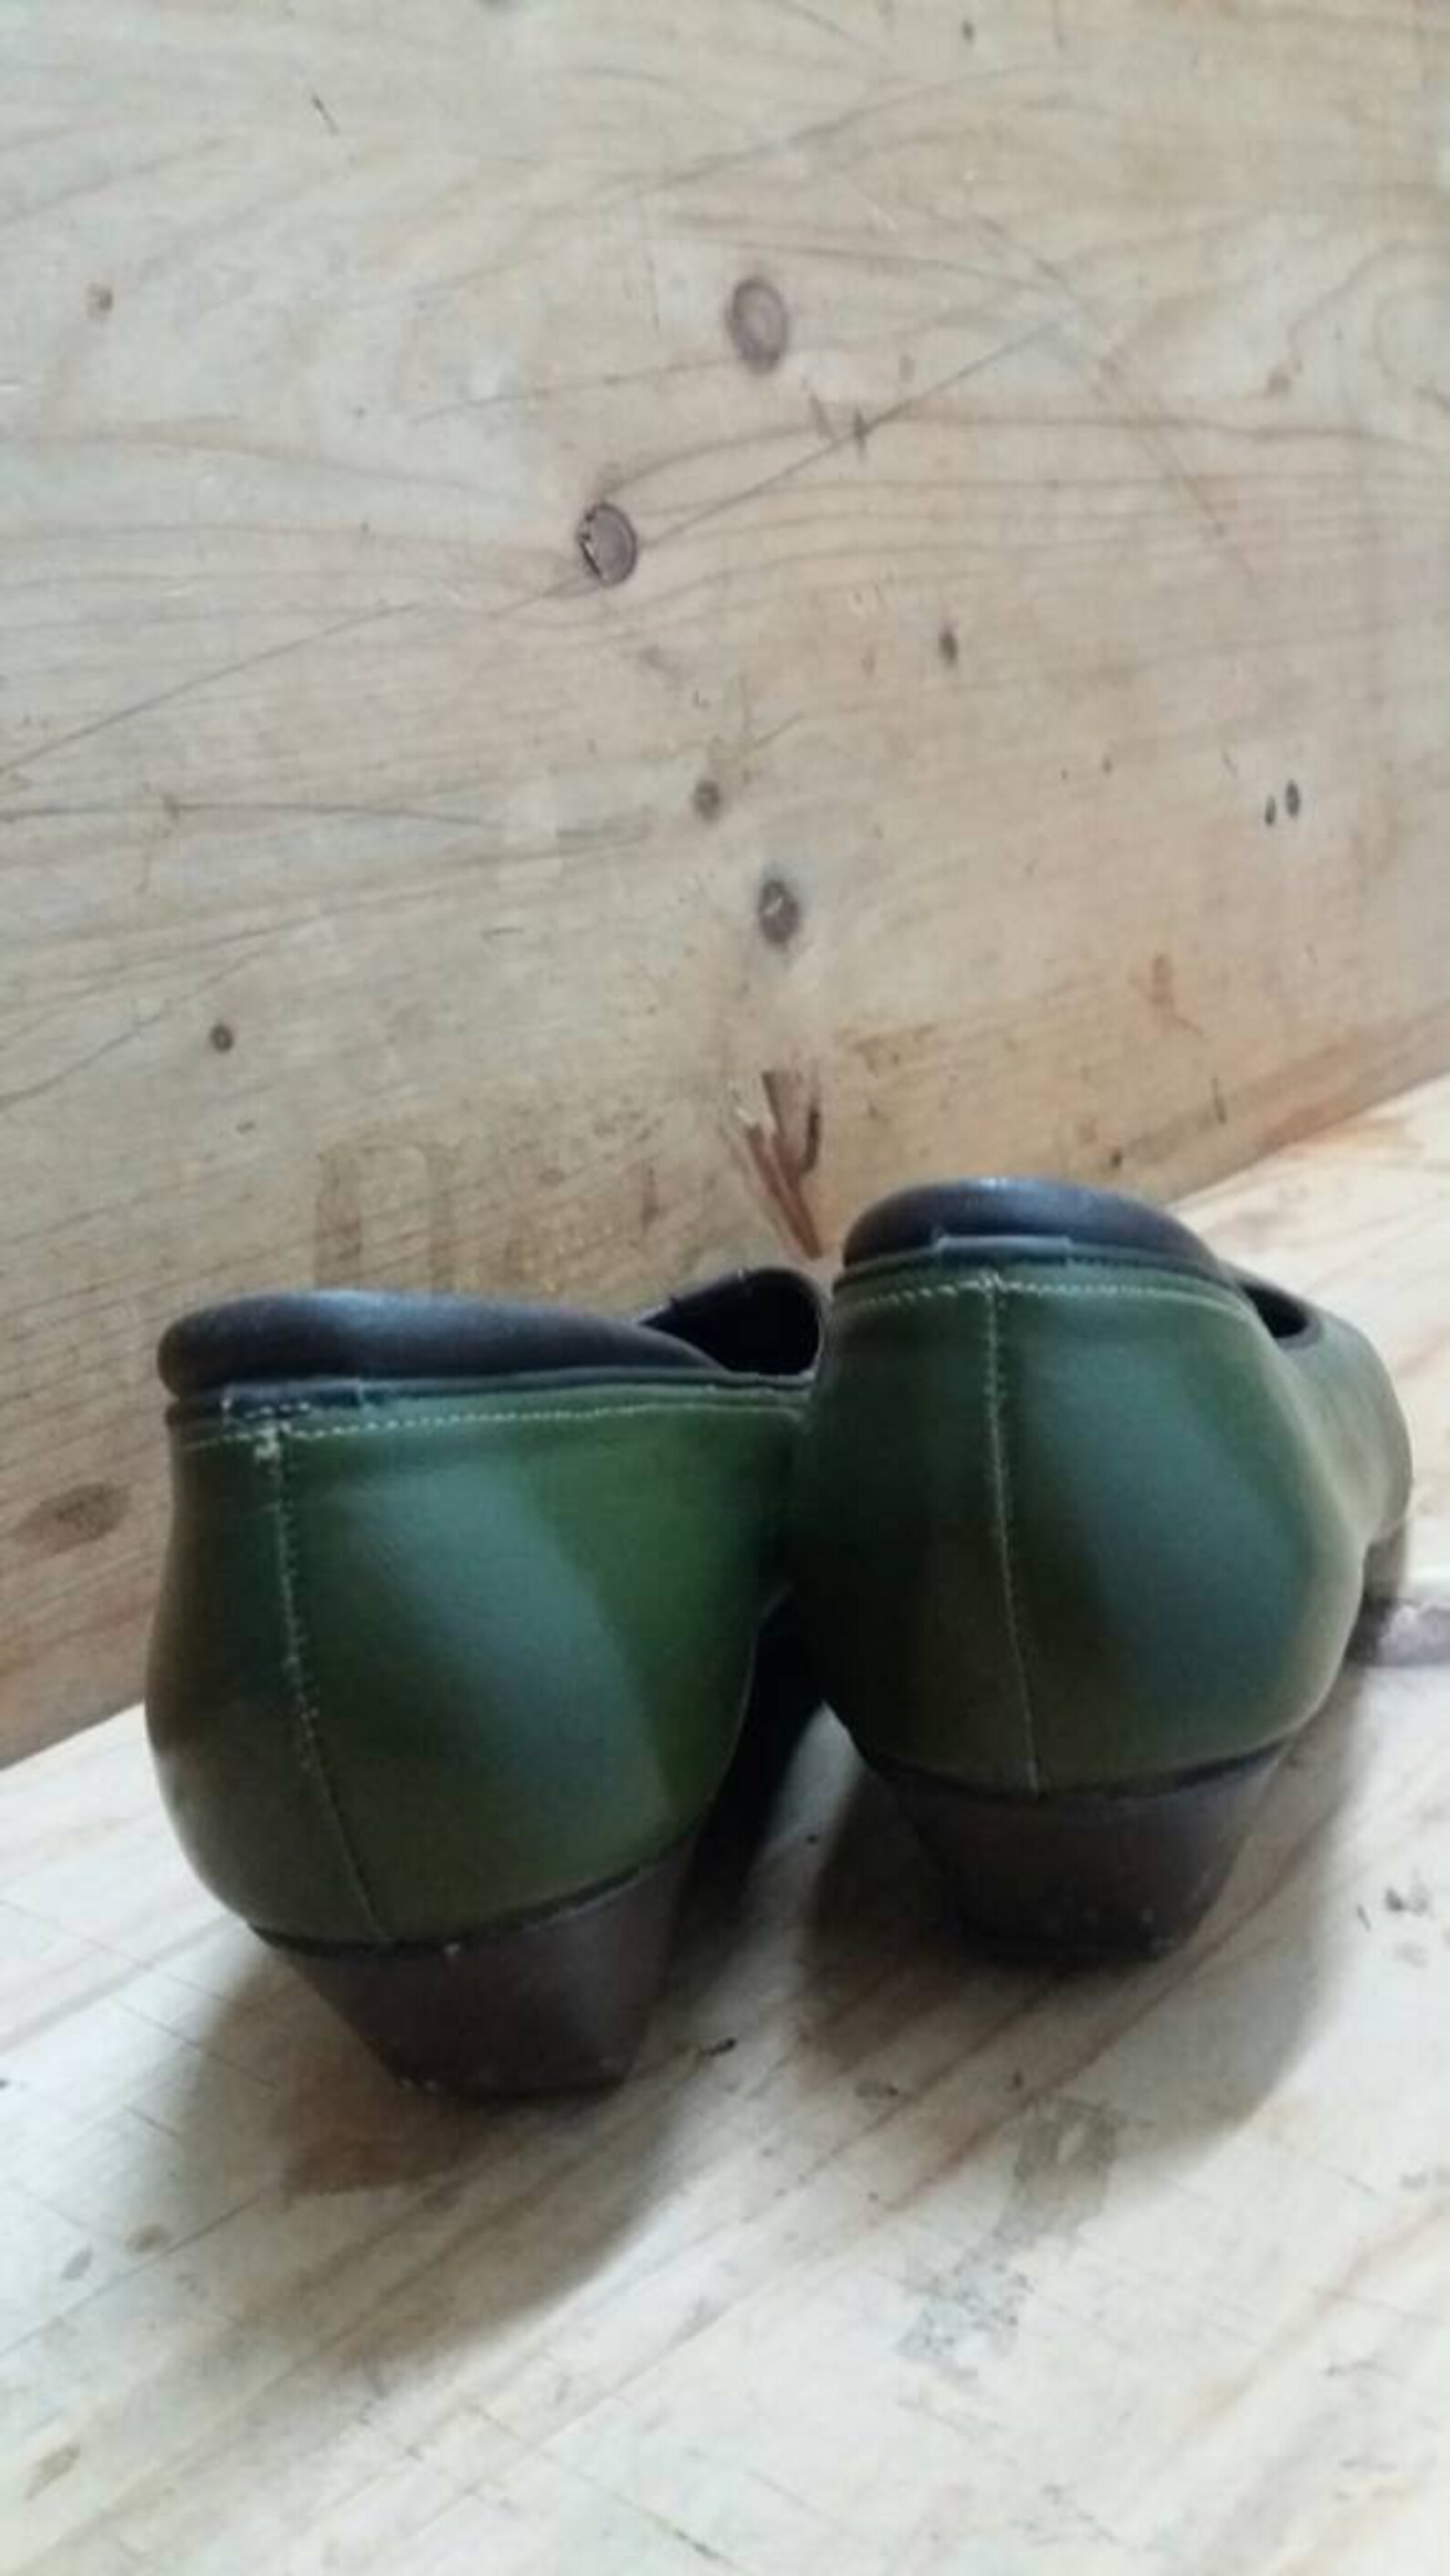 vtg 60s pump ballet green leather shoes